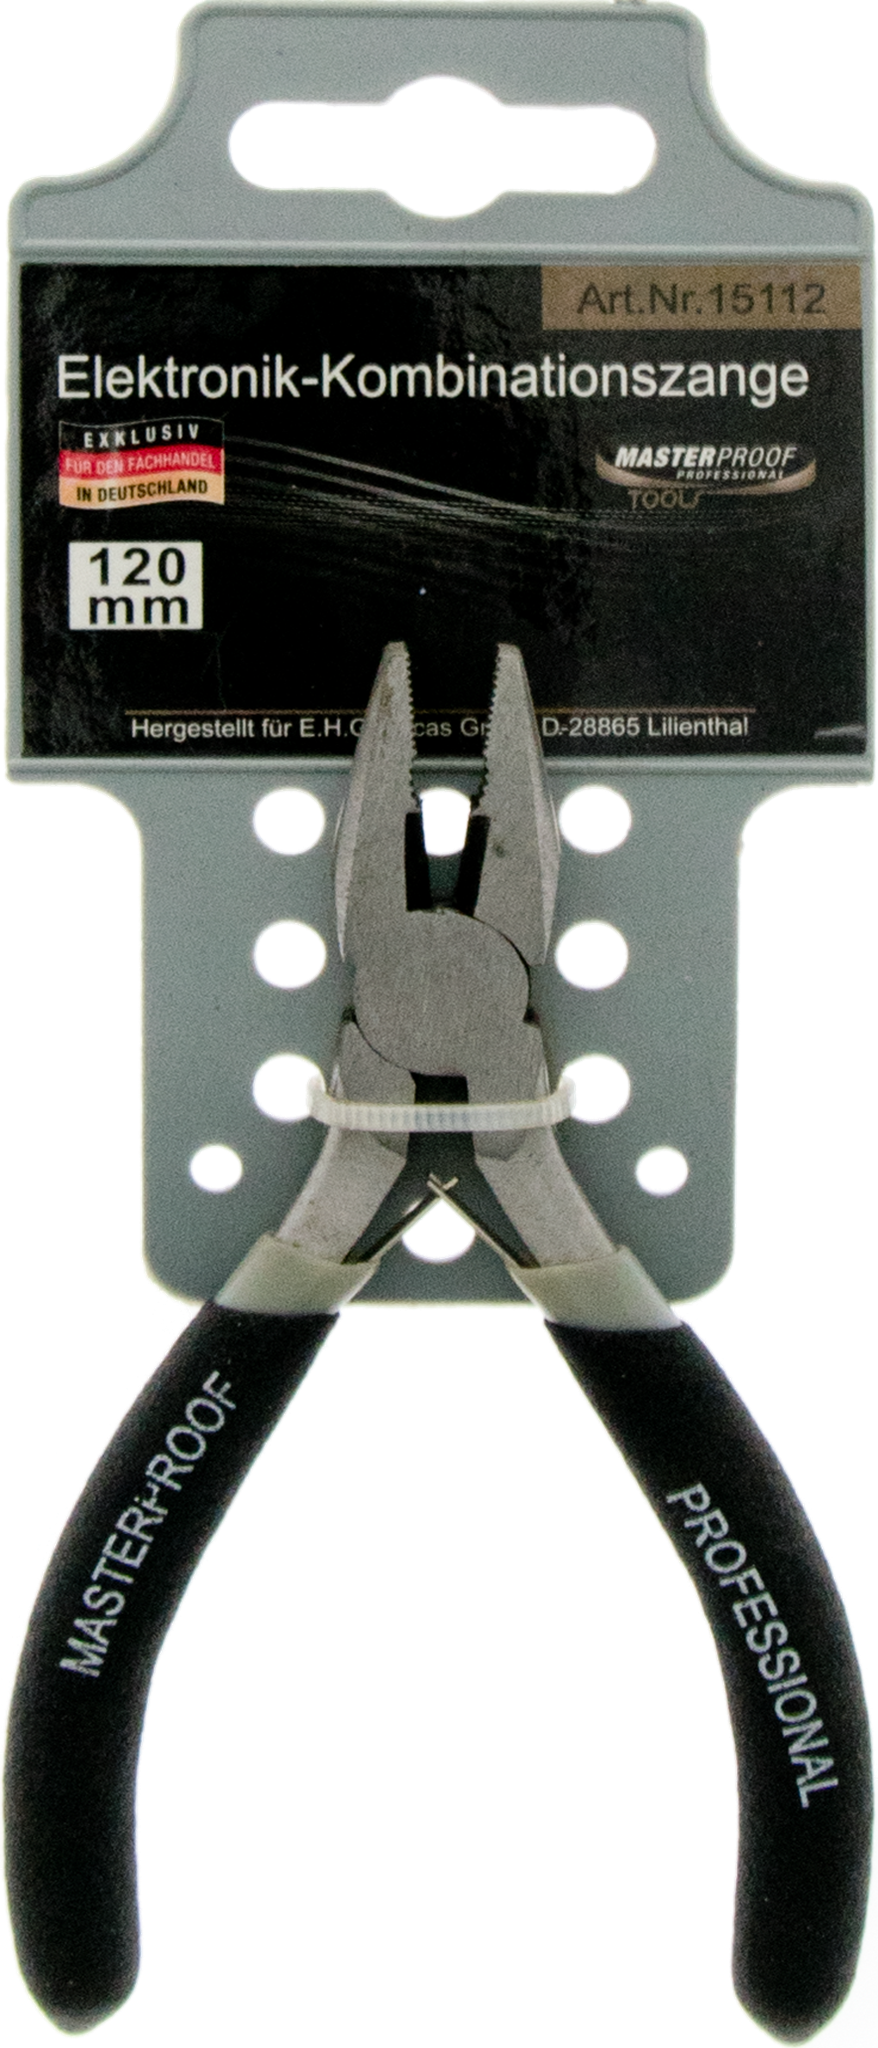 Picture of Elektronik-Kombinationszange